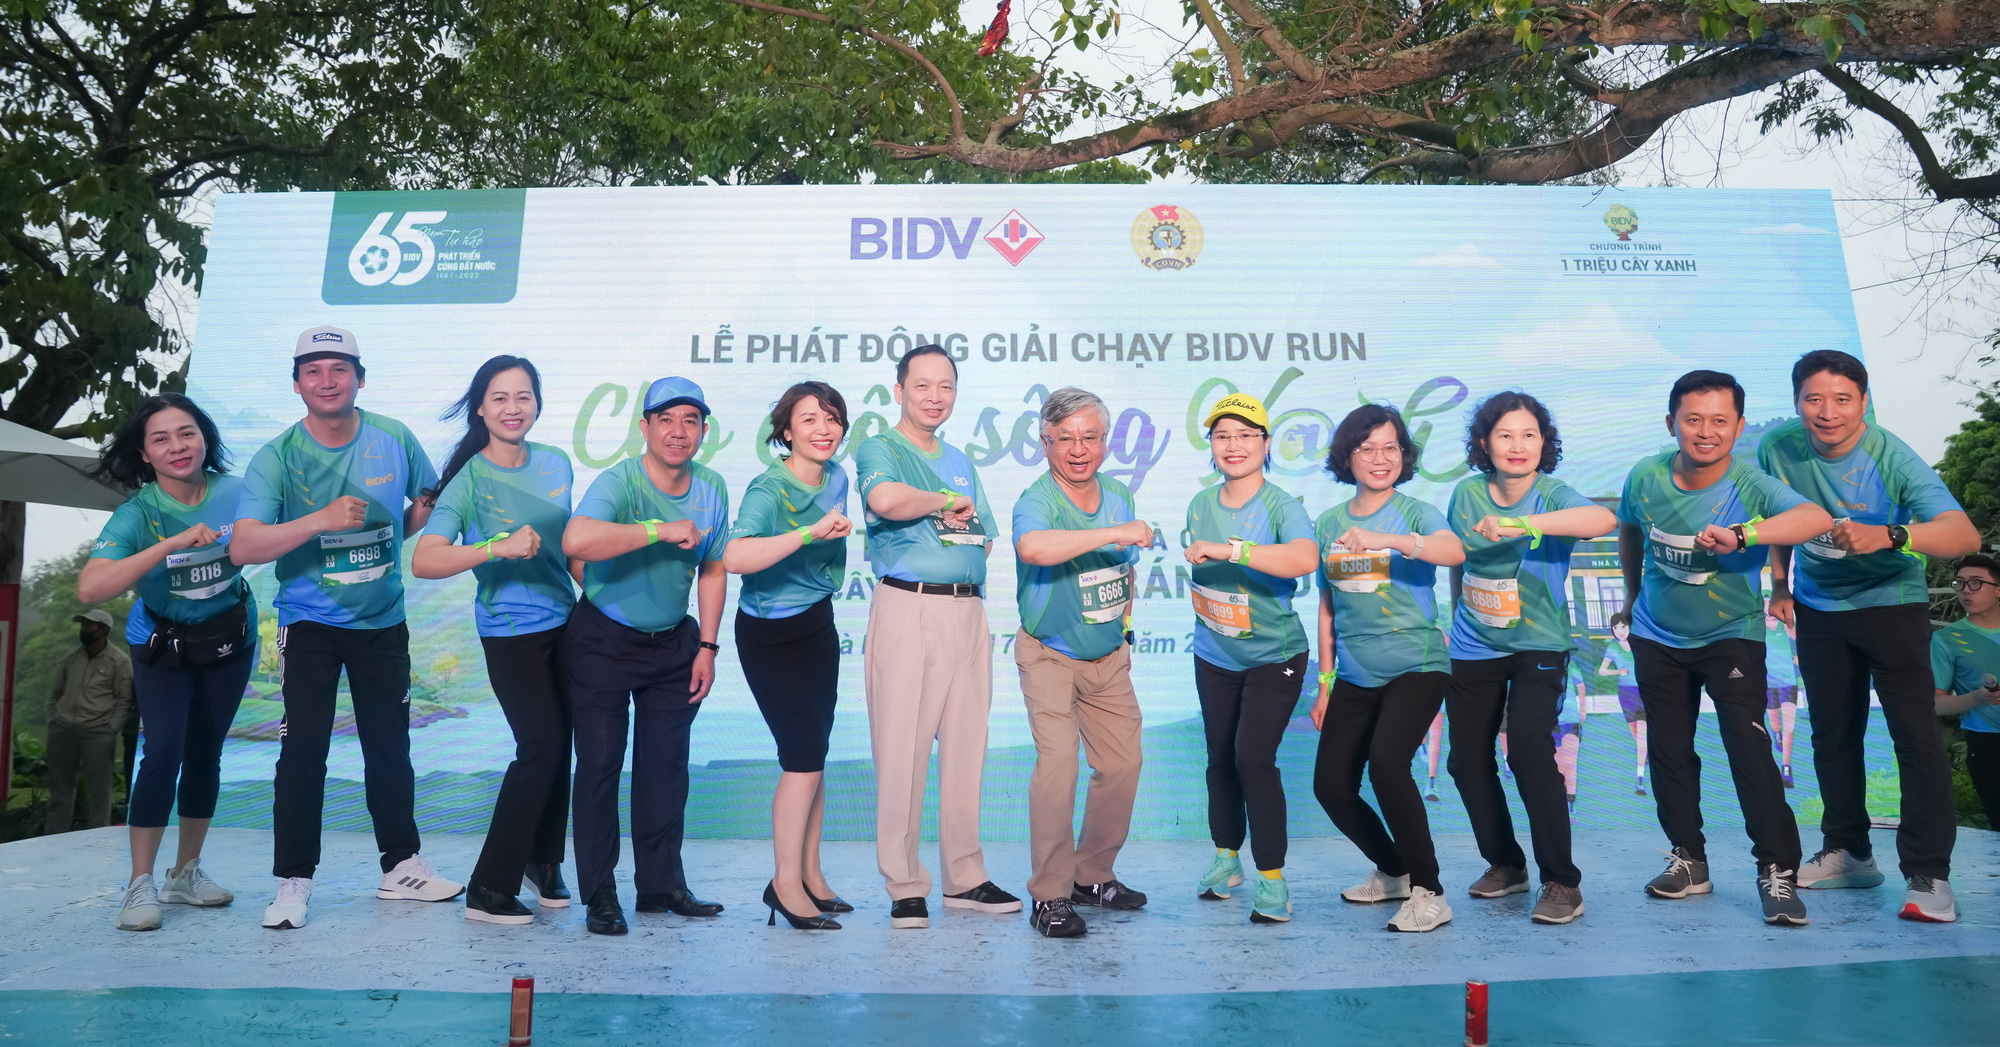 Deputy Governor Dao Minh Tu participated in the BIDVRun